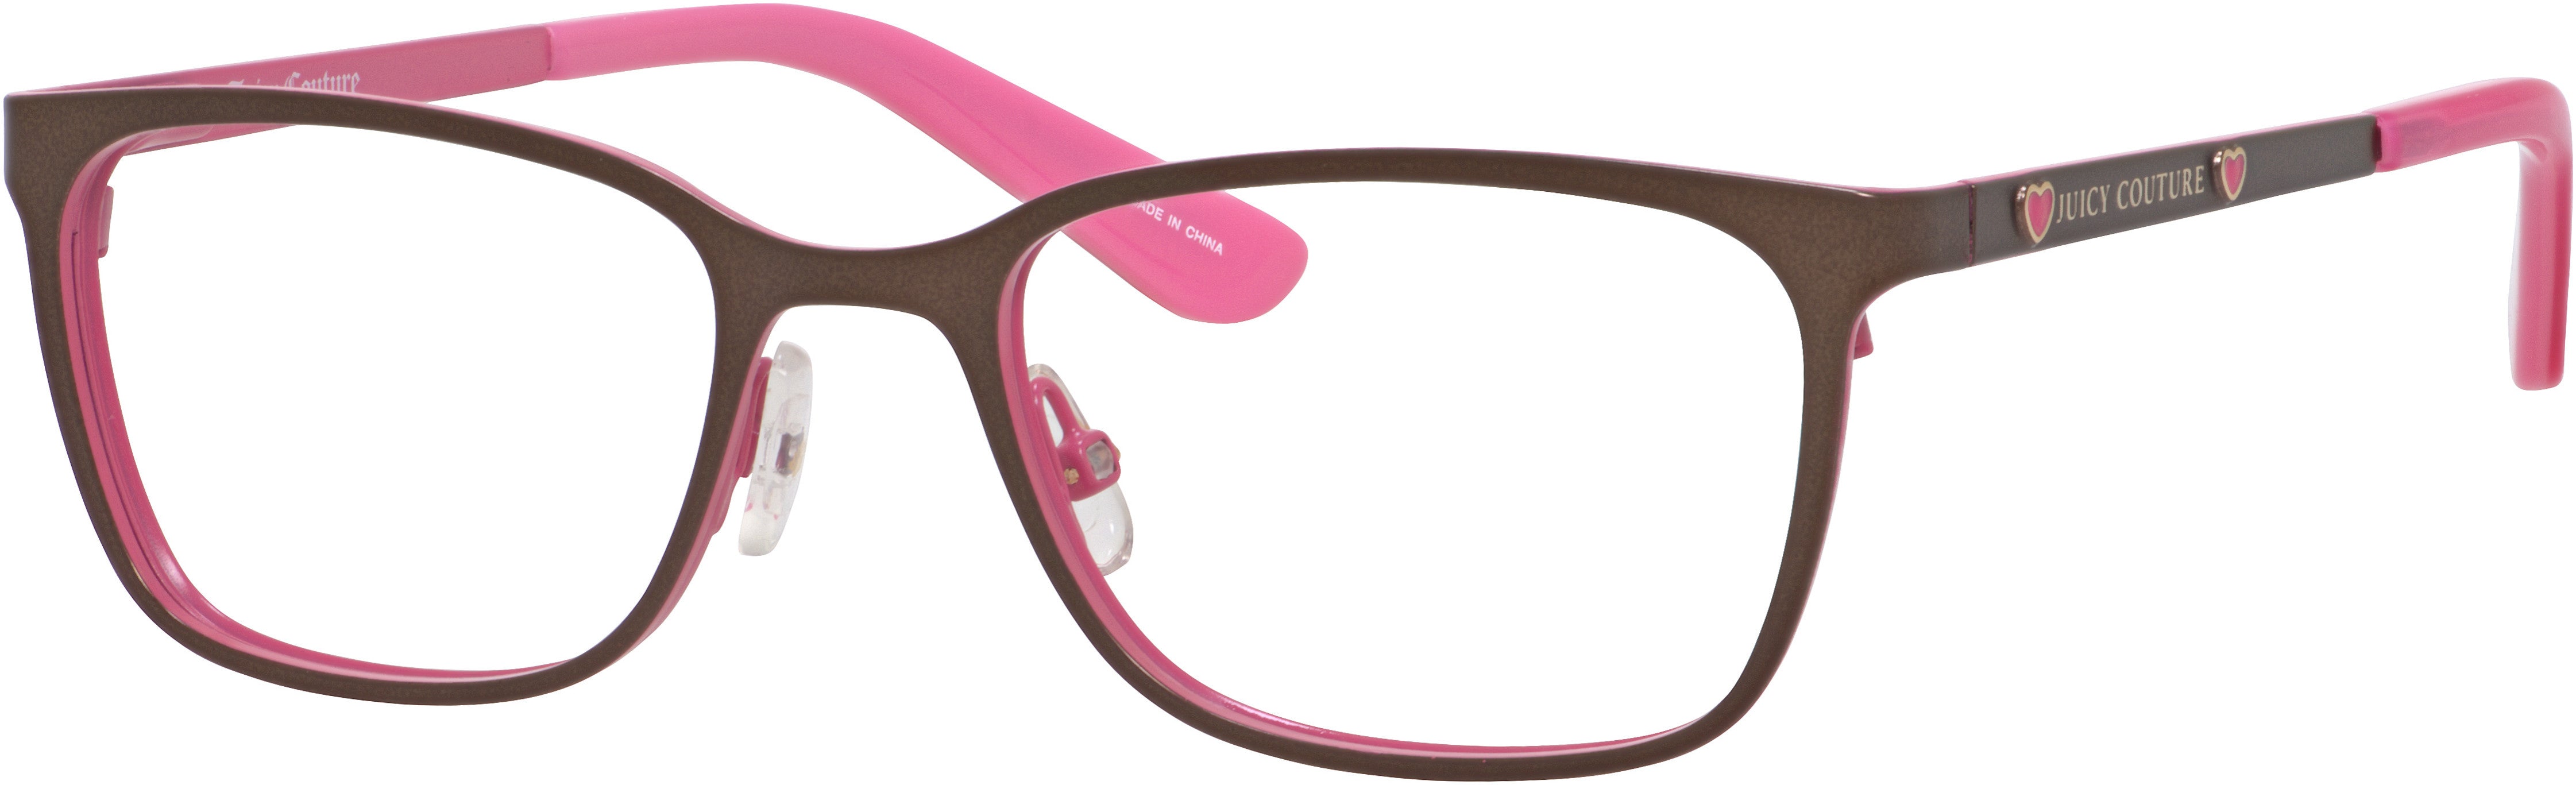 Juicy Couture Juicy 930 Square Eyeglasses 0DQ2-0DQ2  Brown Pink (00 Demo Lens)